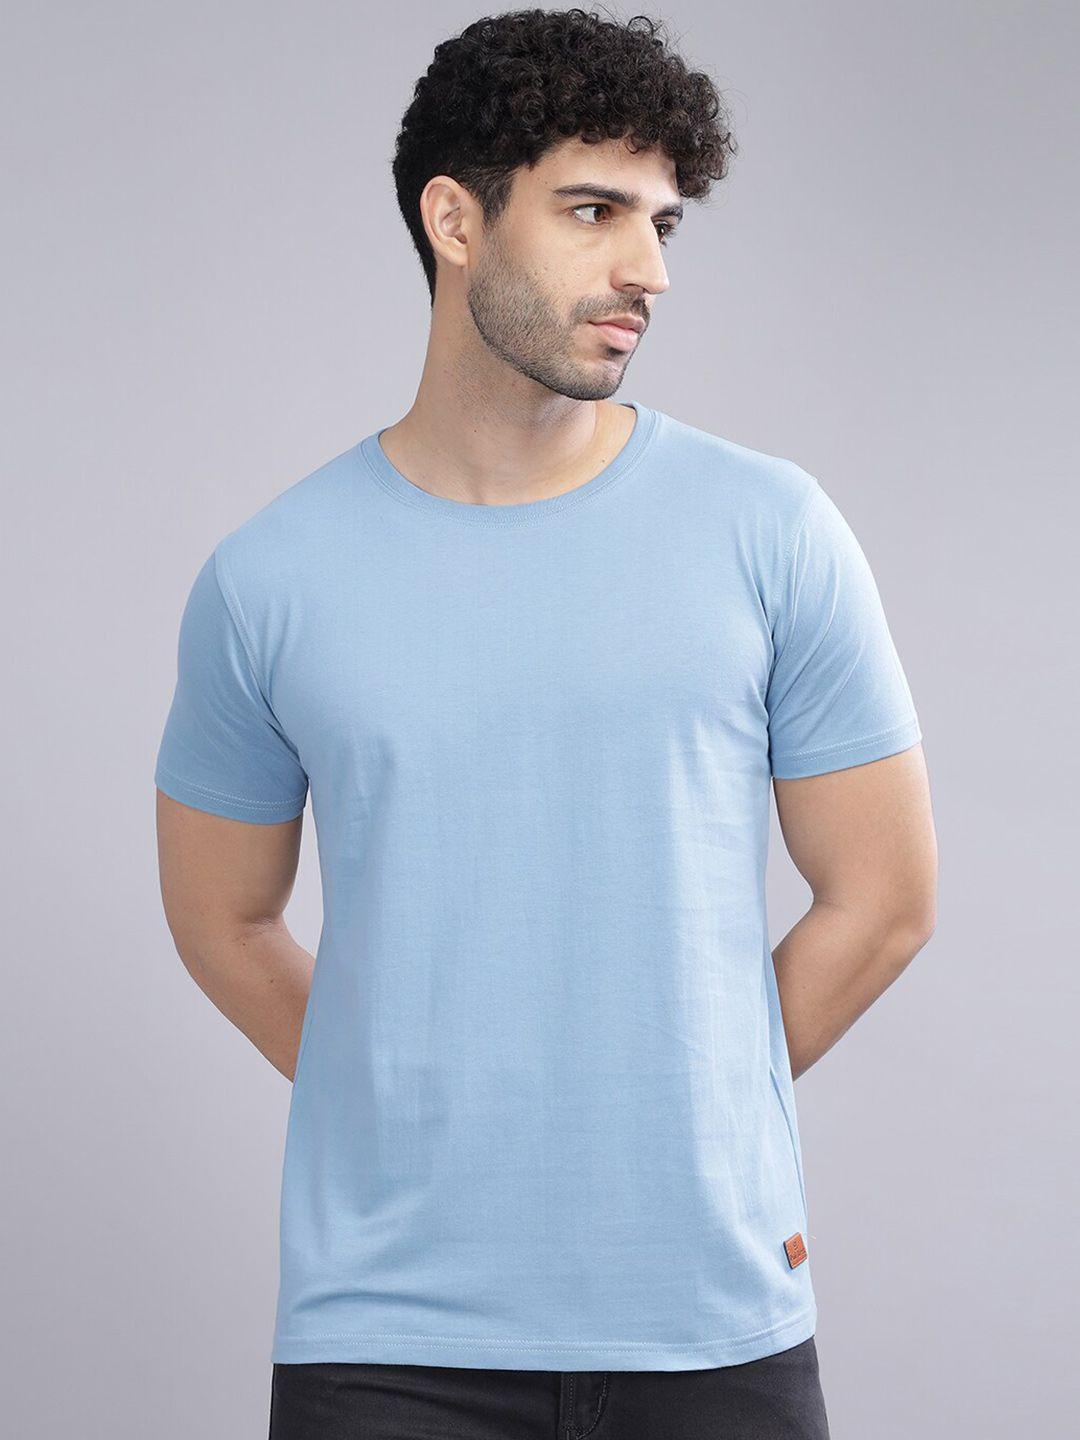 paul street round neck bio finish pure cotton slim fit t-shirt